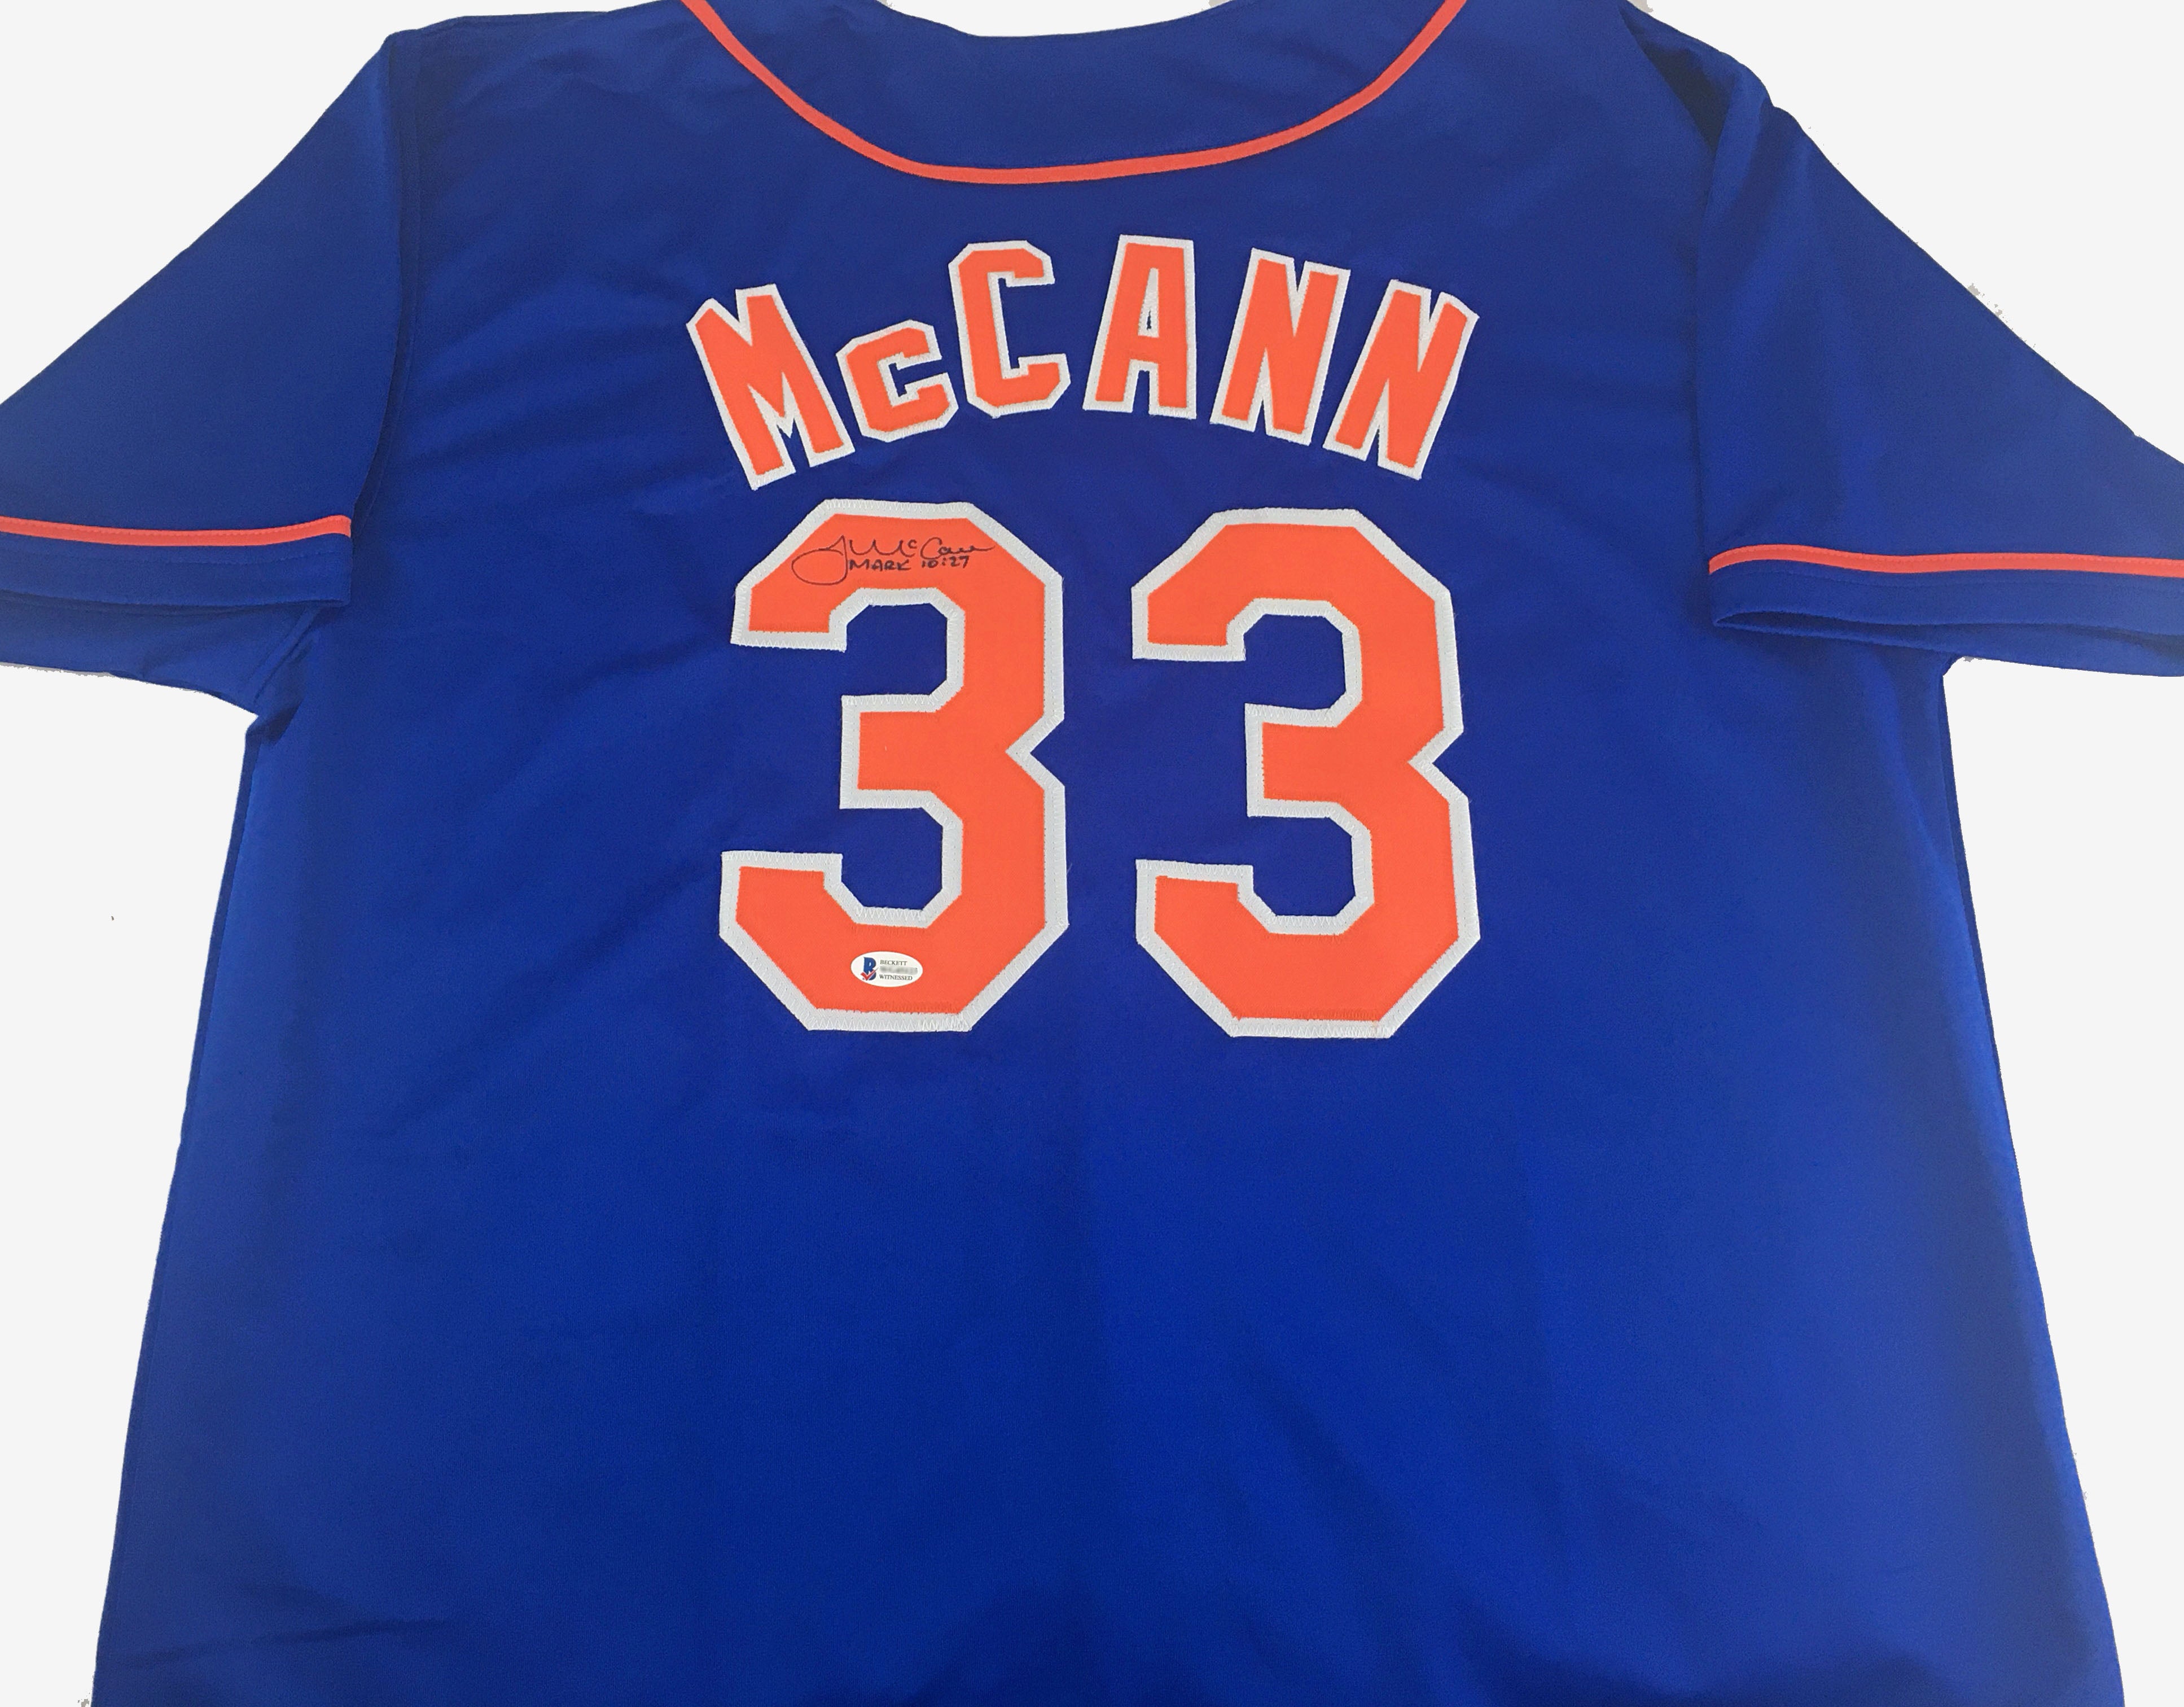 James McCann Signed Blue Baseball Jersey - Size XL: BM Authentics